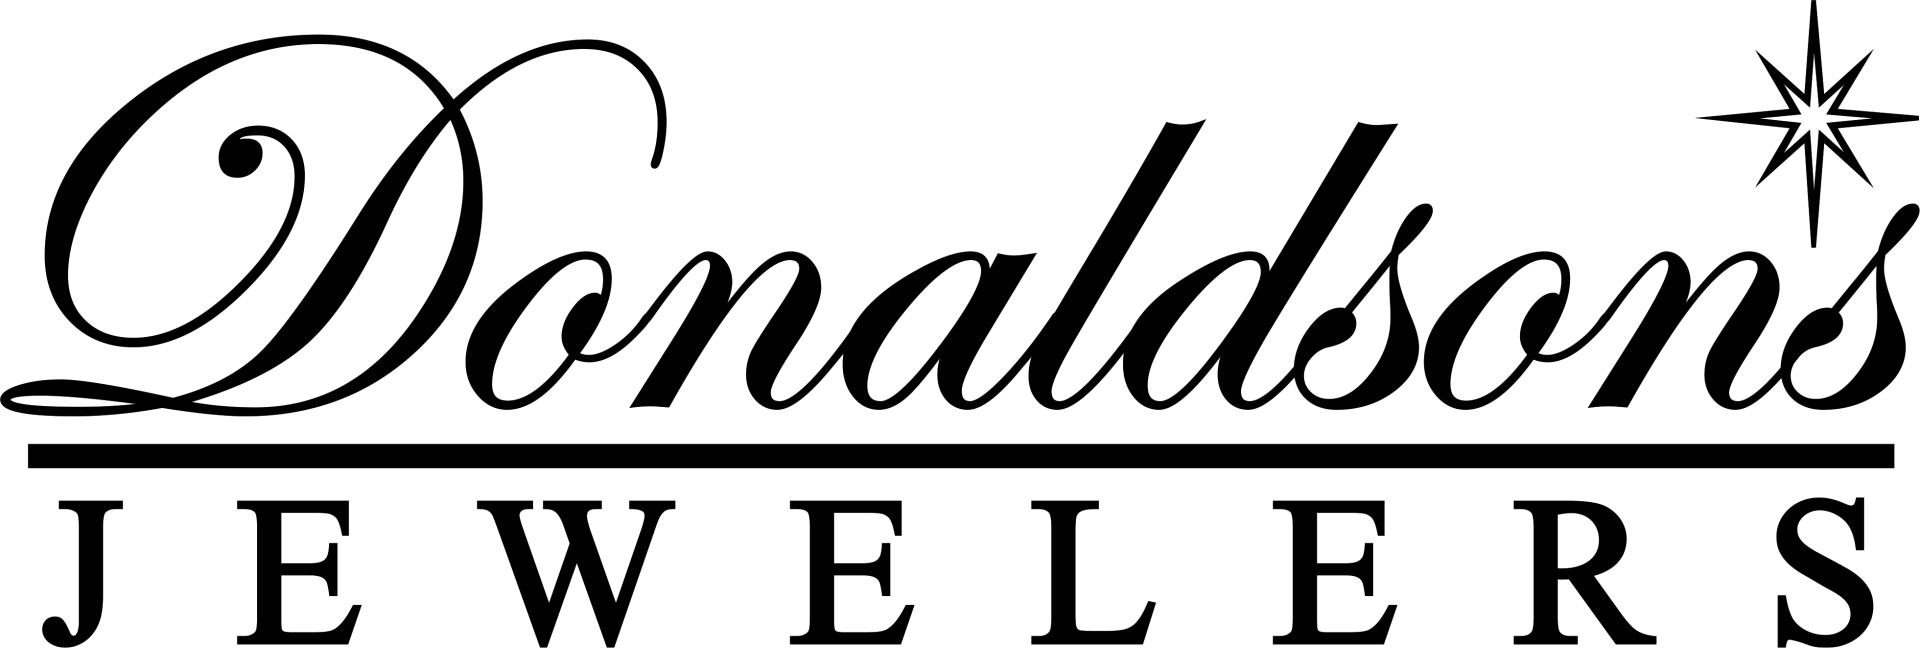 Donaldson's Jewelers logo